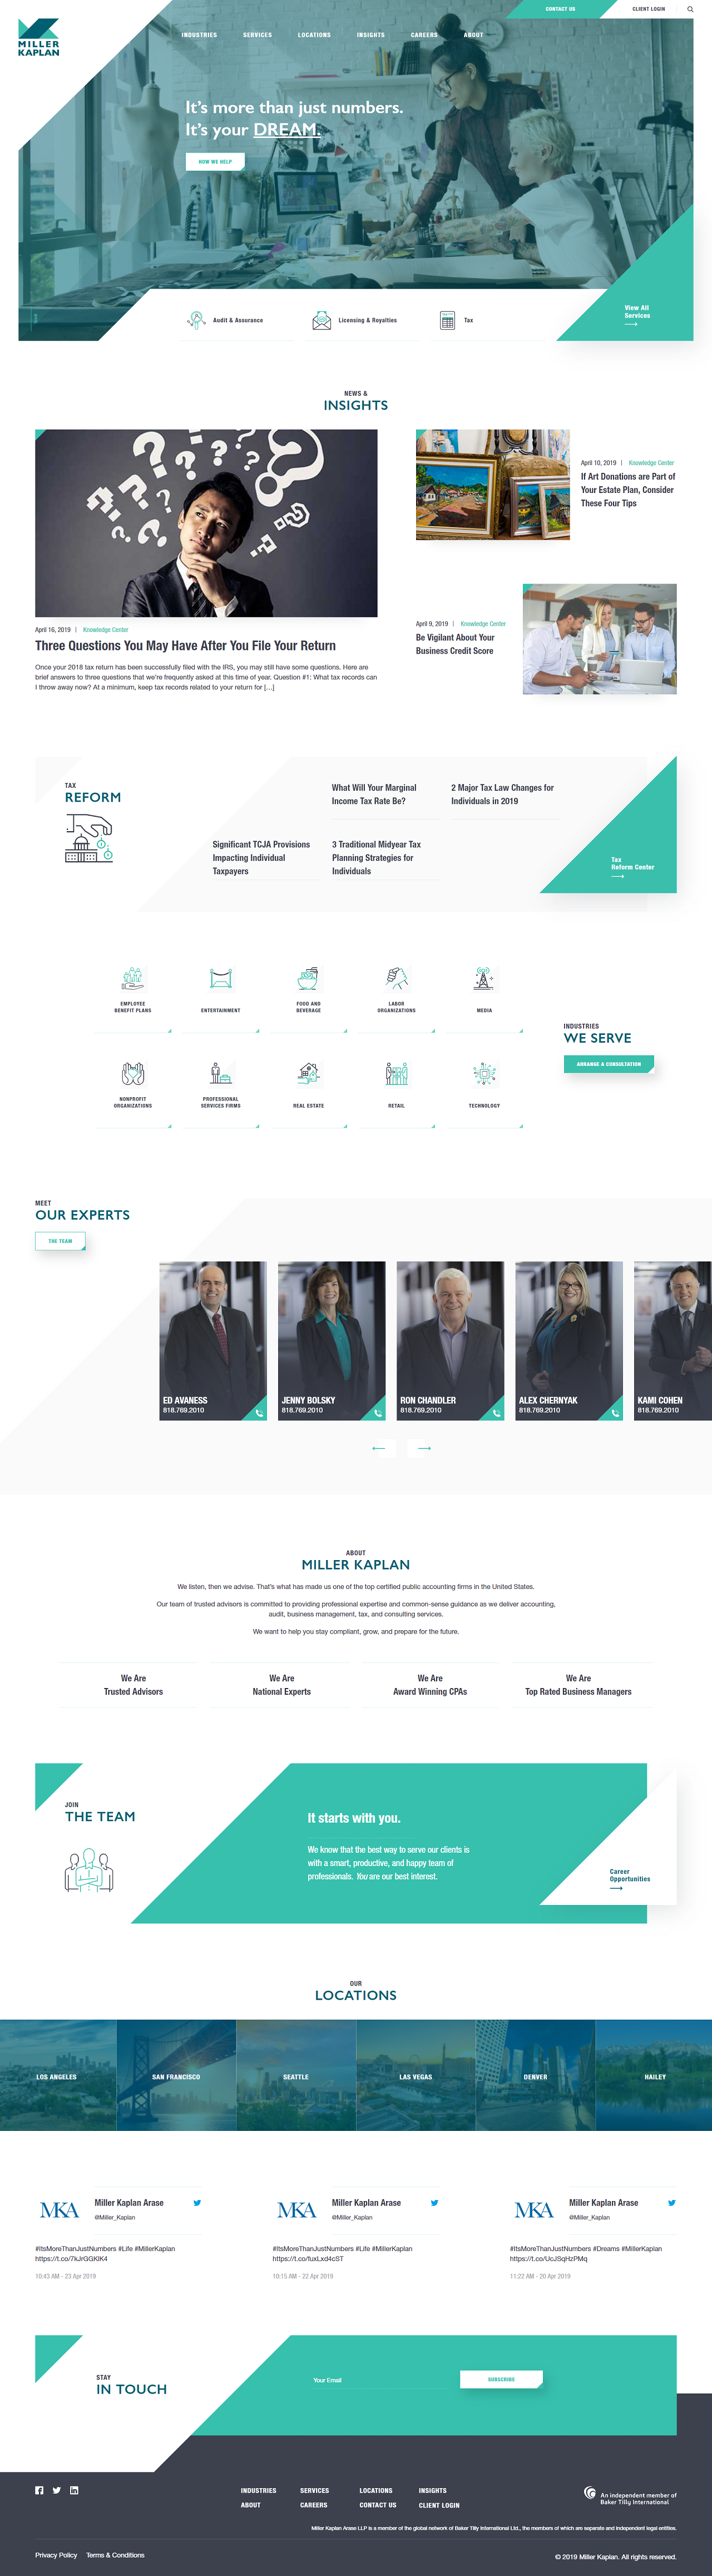 Miller Kaplan's Home Page Design & Development